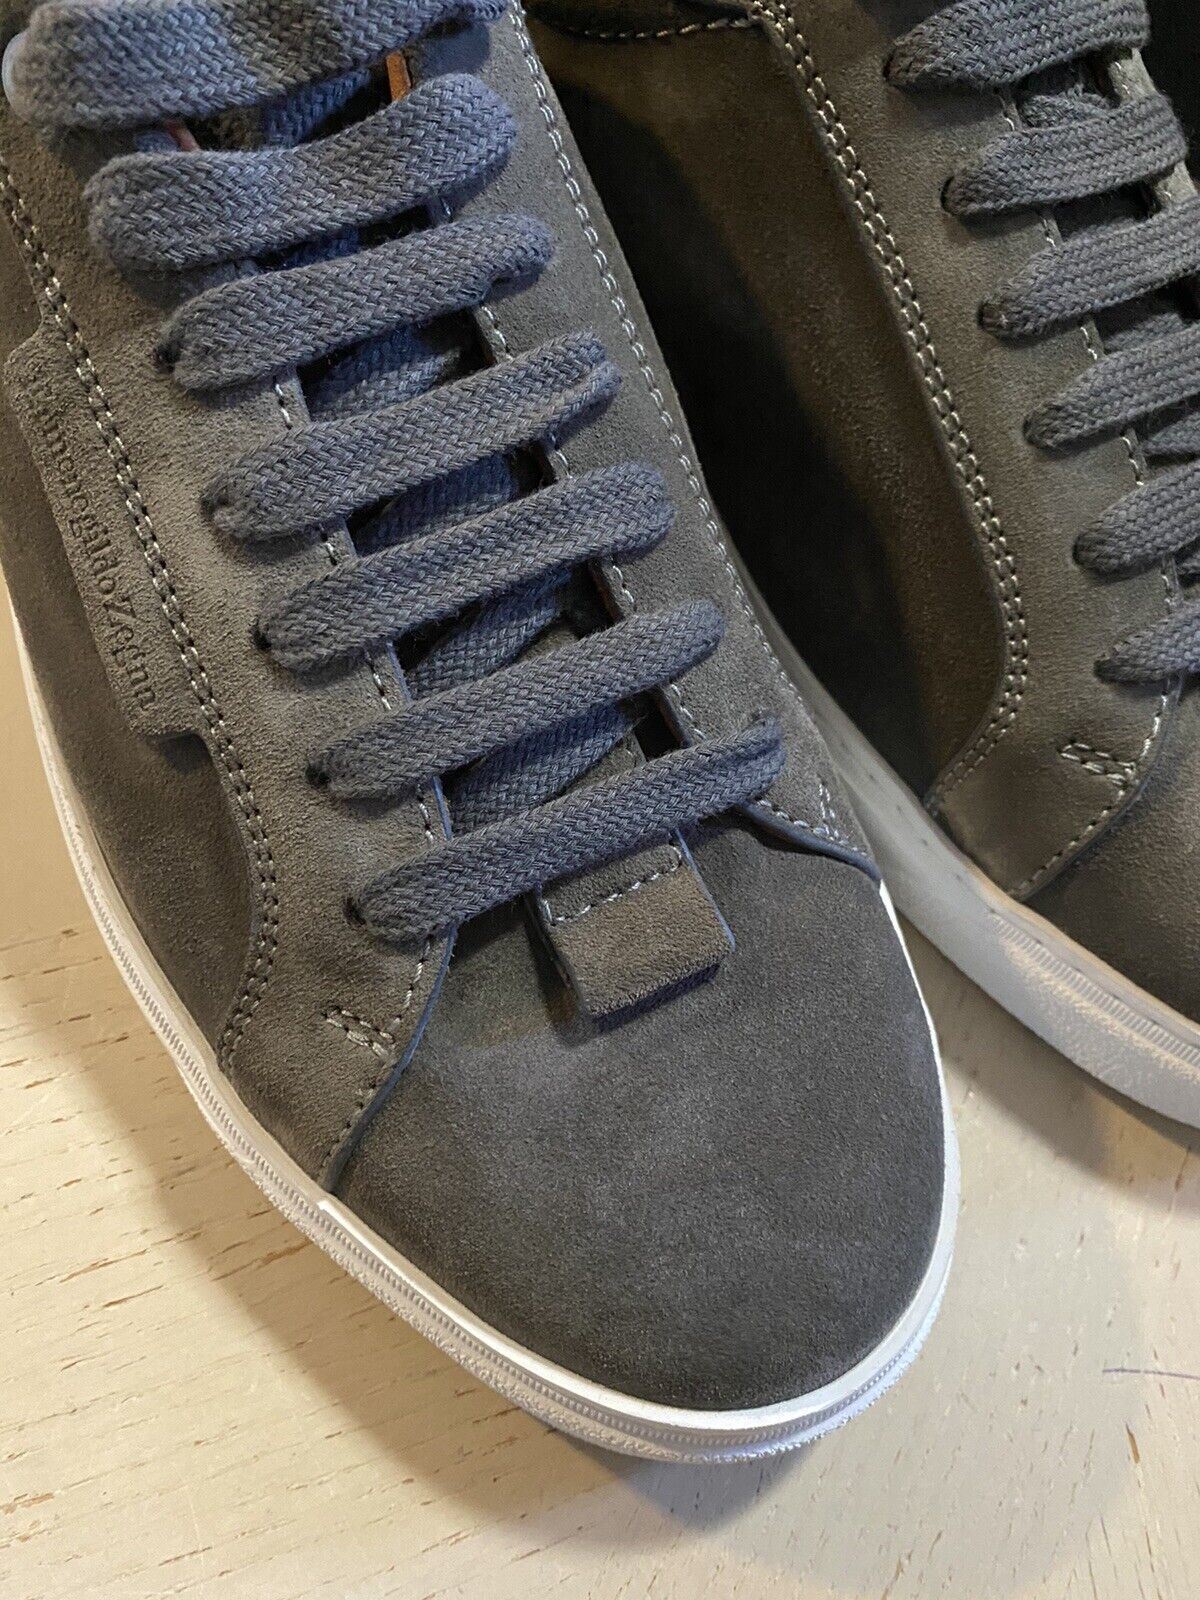 New $495 Ermenegildo Zegna Suede Sneakers Shoes DK Gray 10.5 US Italy